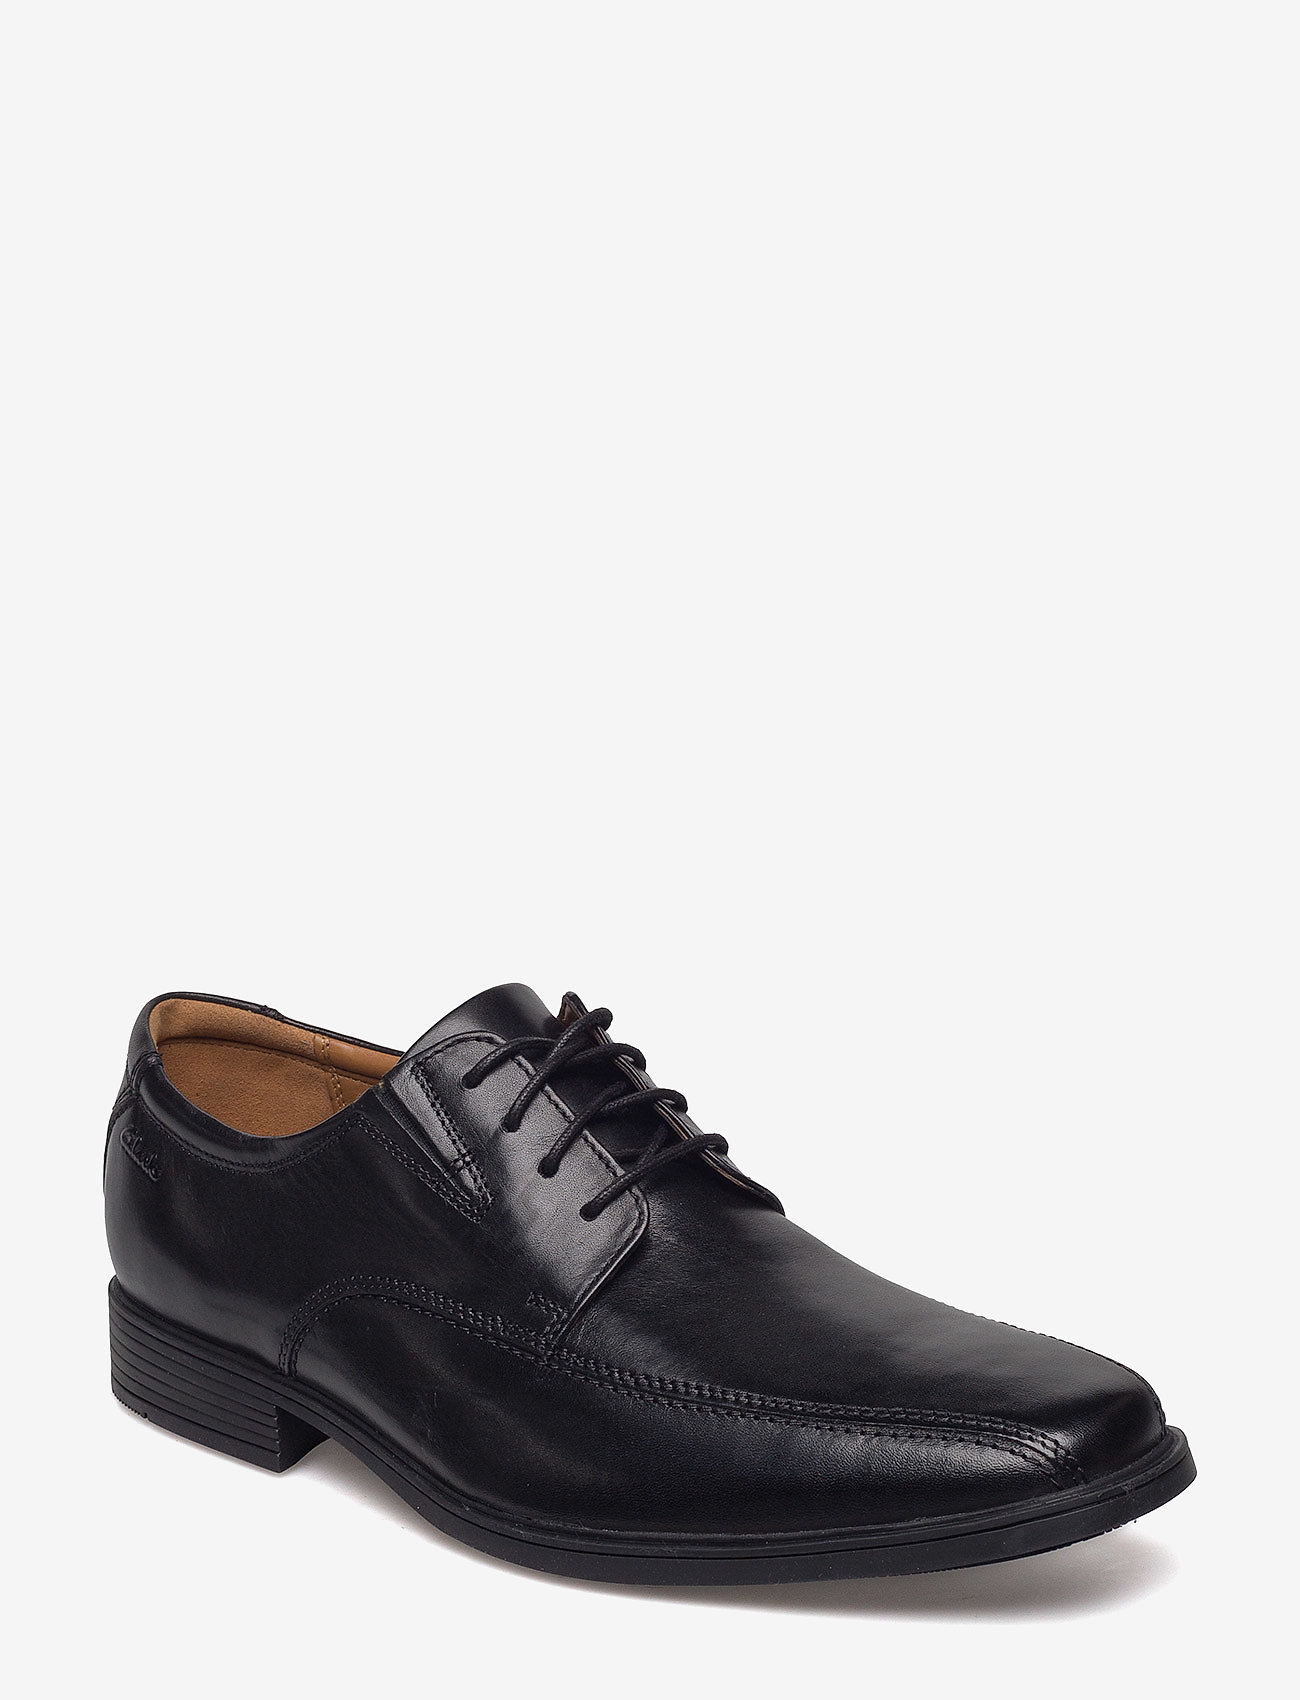 Clarks - Tilden Walk - paeltega jalanõud - black leather - 0